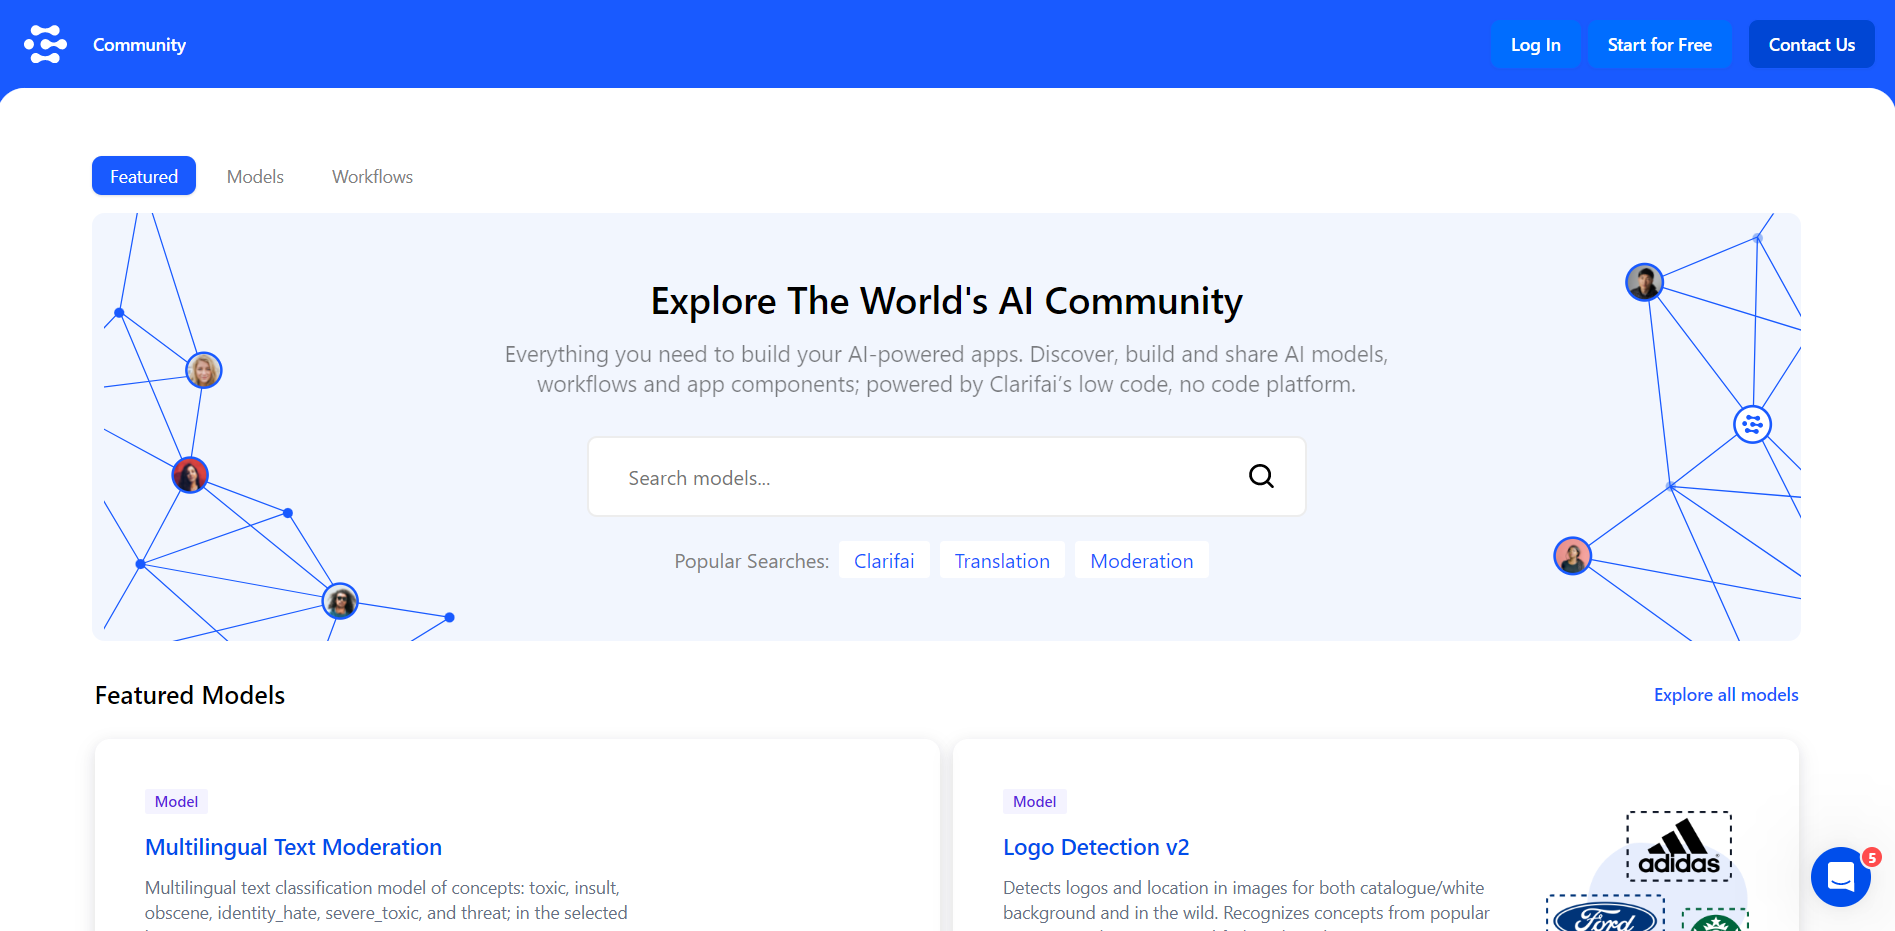 community homepage